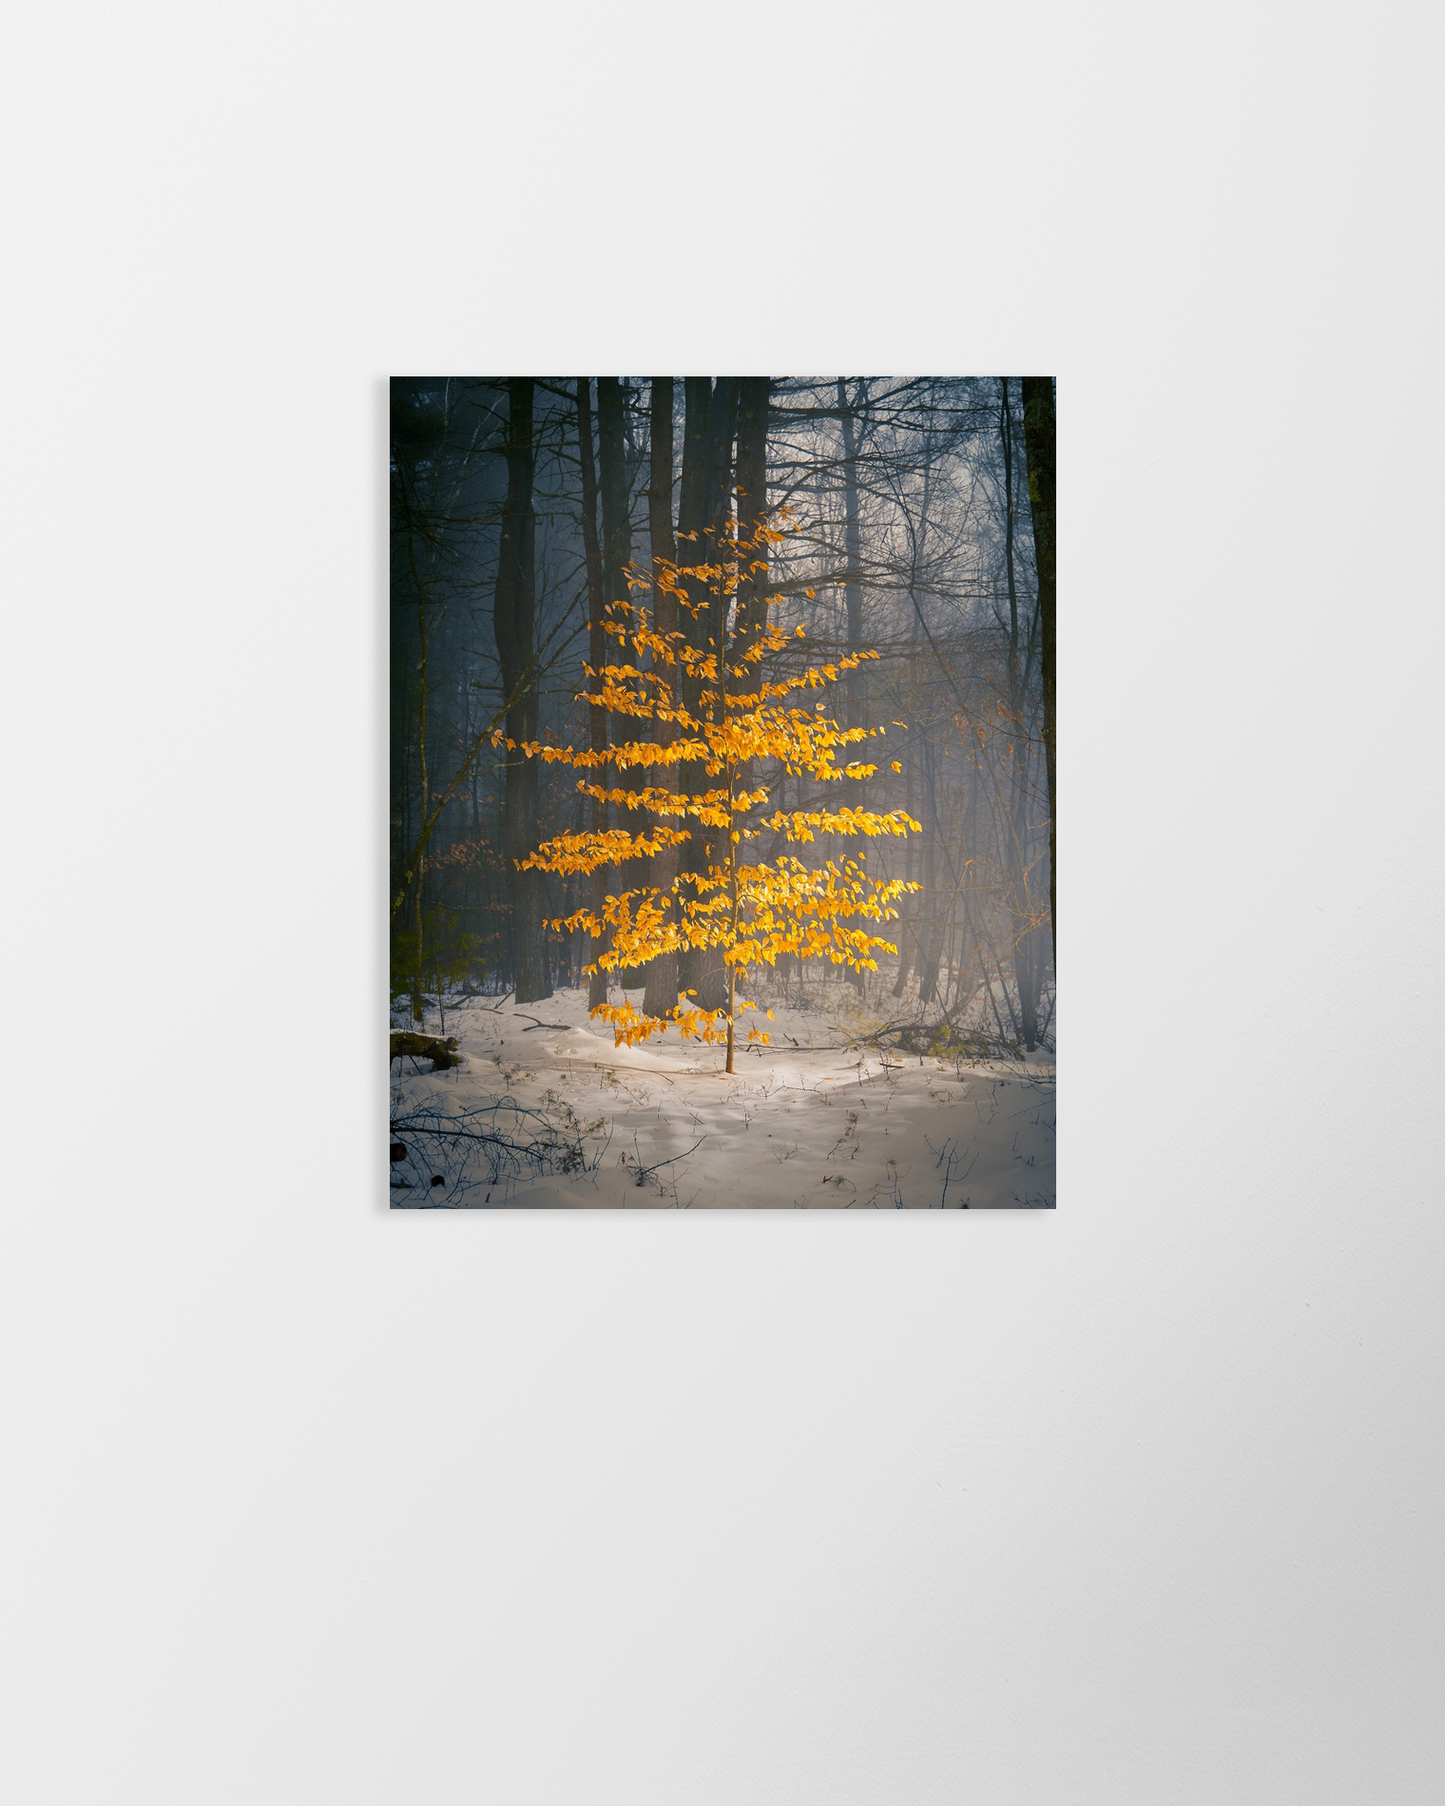 shutesbury winter tree by Jamie Malcolm Brown